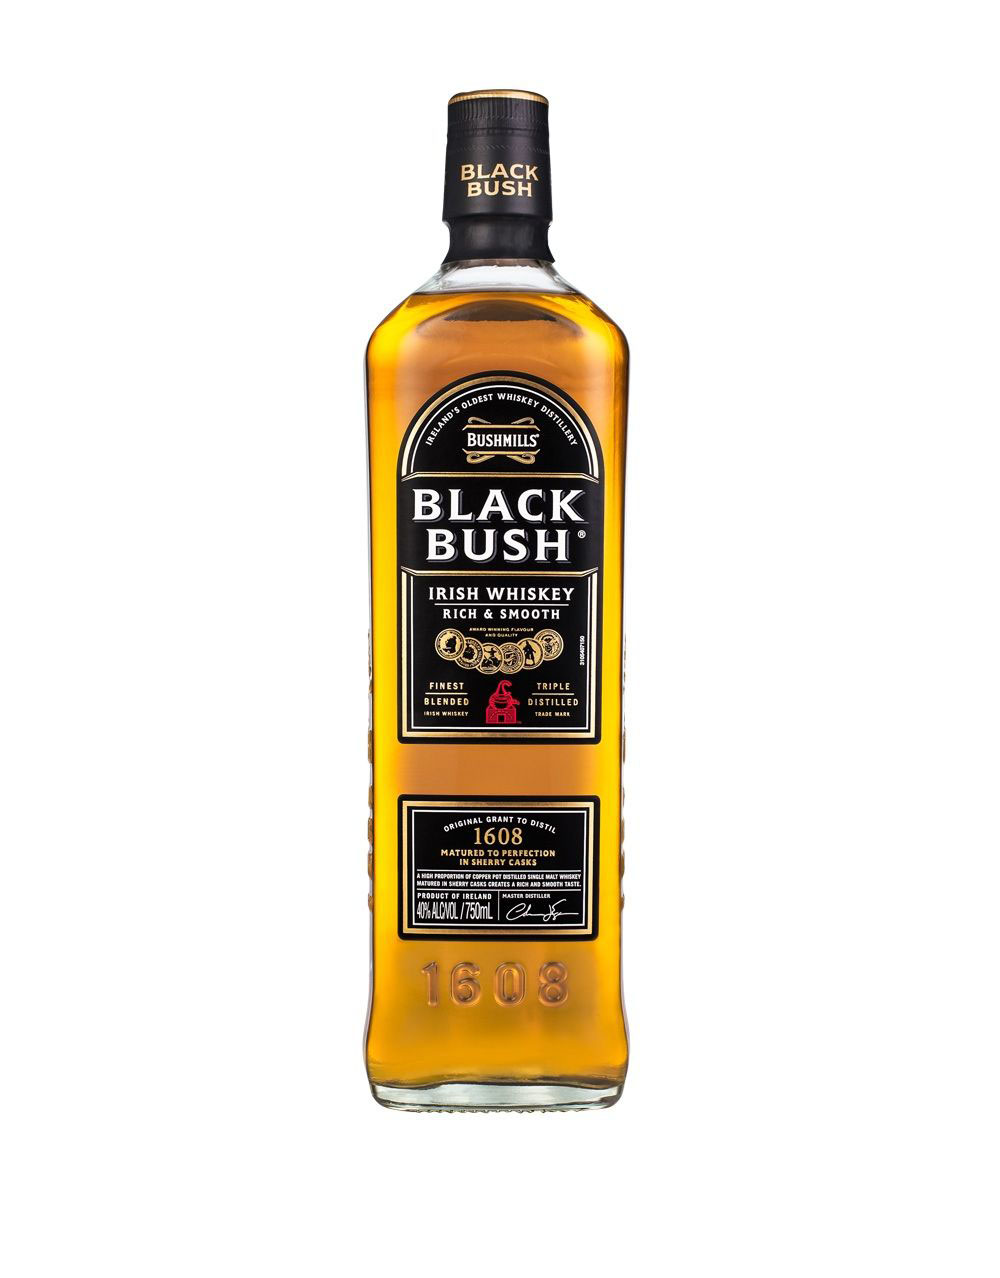 The Macallan Classic Cut 2019 Edition Single Malt Scotch Whisky